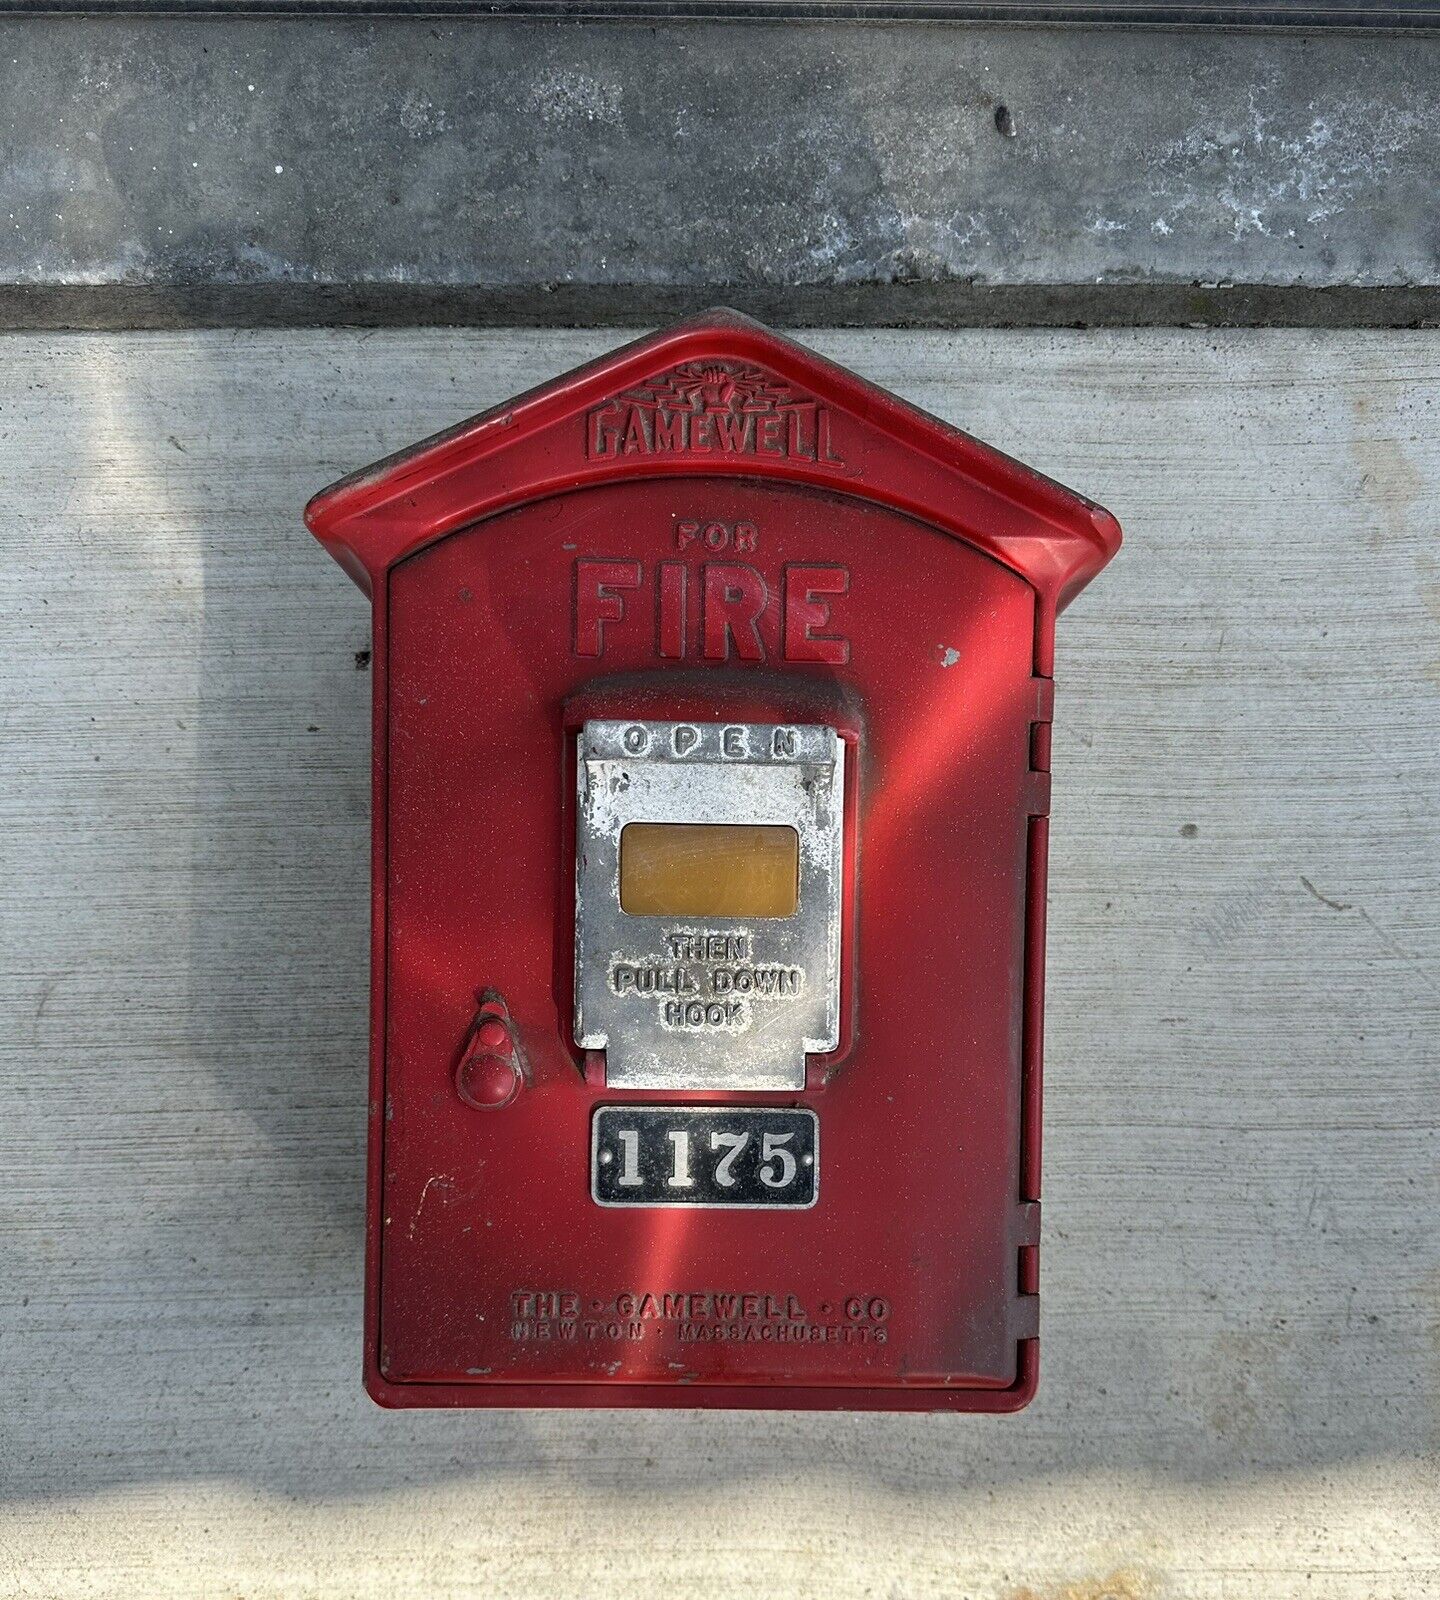 Nice Vintage Gamewell Fire Alarm Box.